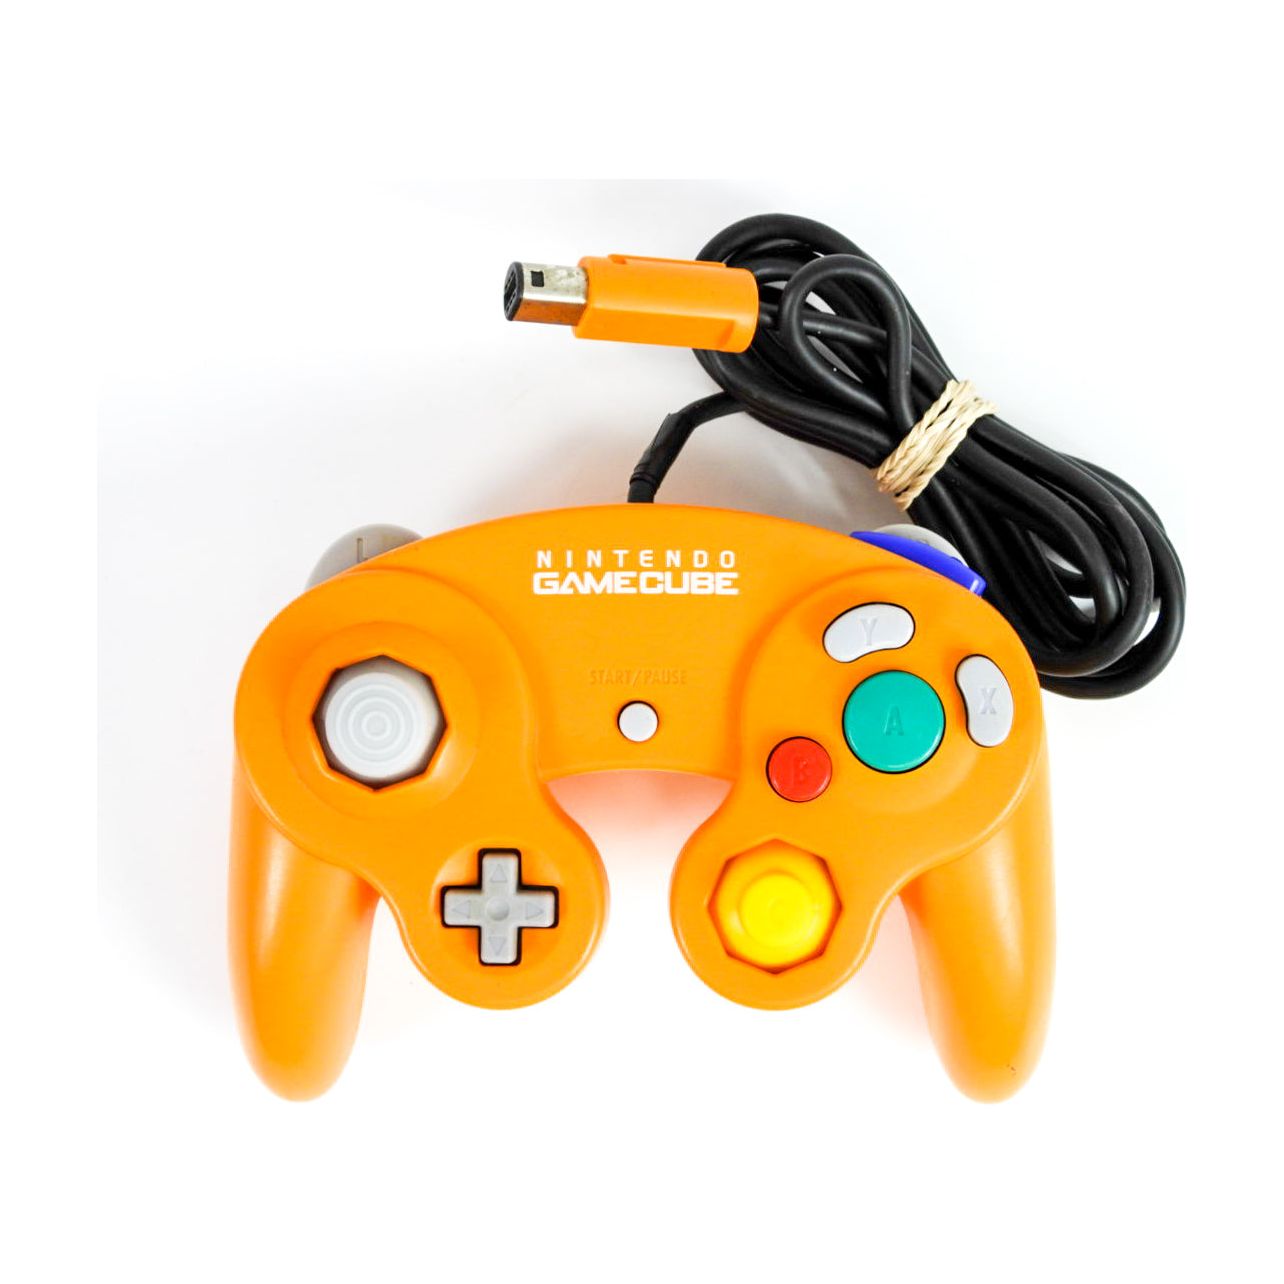 Branded Nintendo Gamecube Controller (Spice Orange / Used)